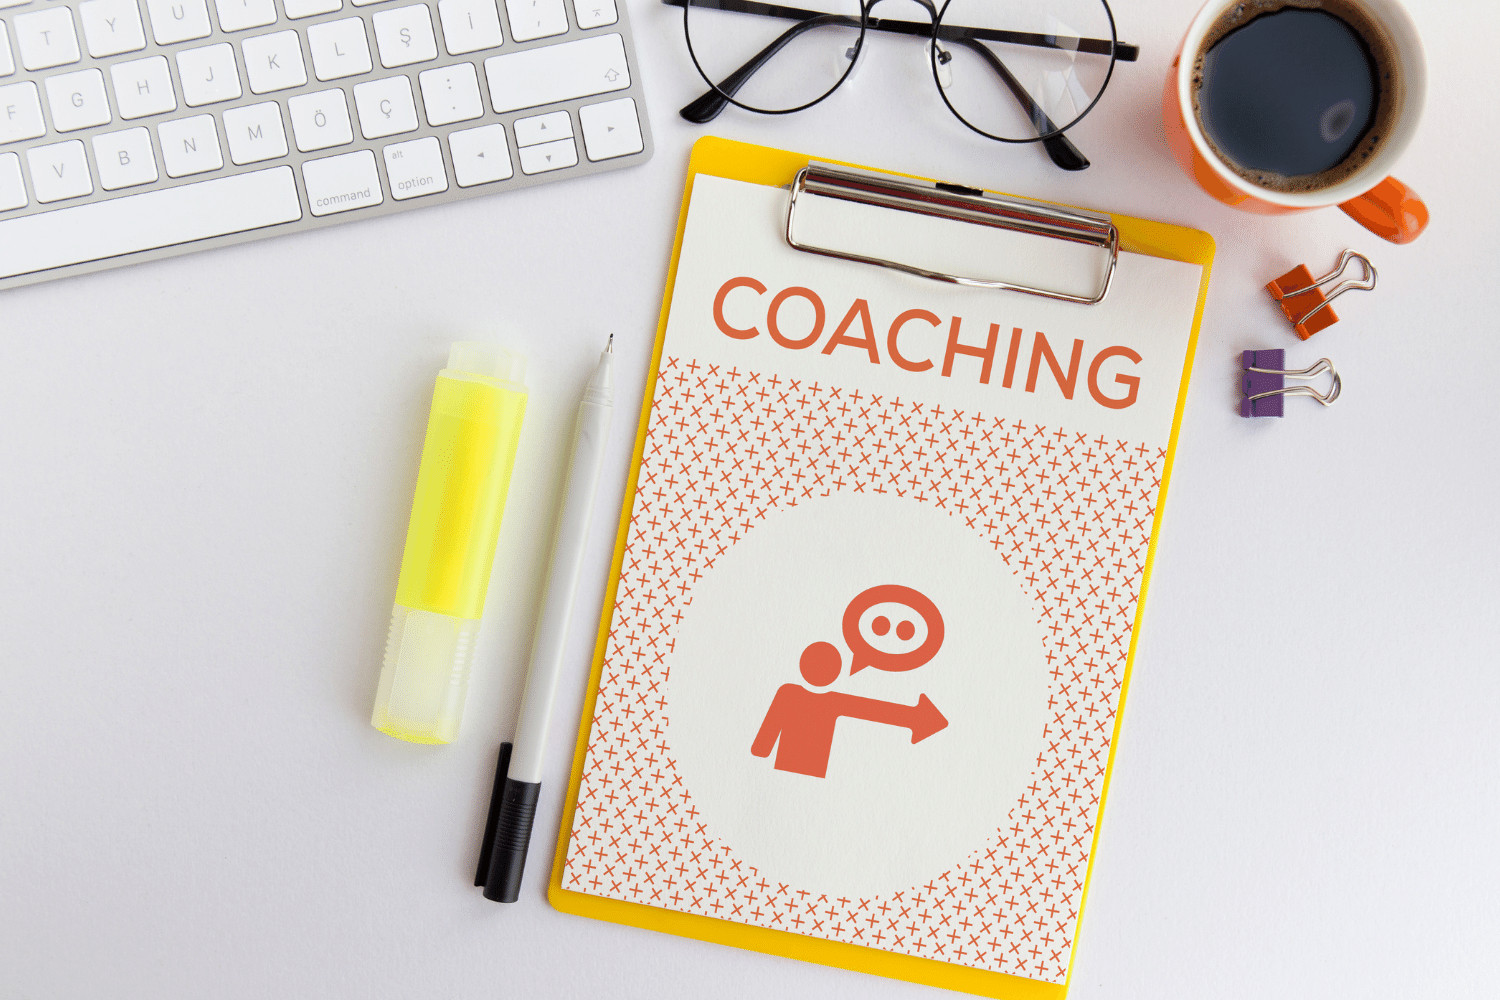 Executive mentoring and coaching